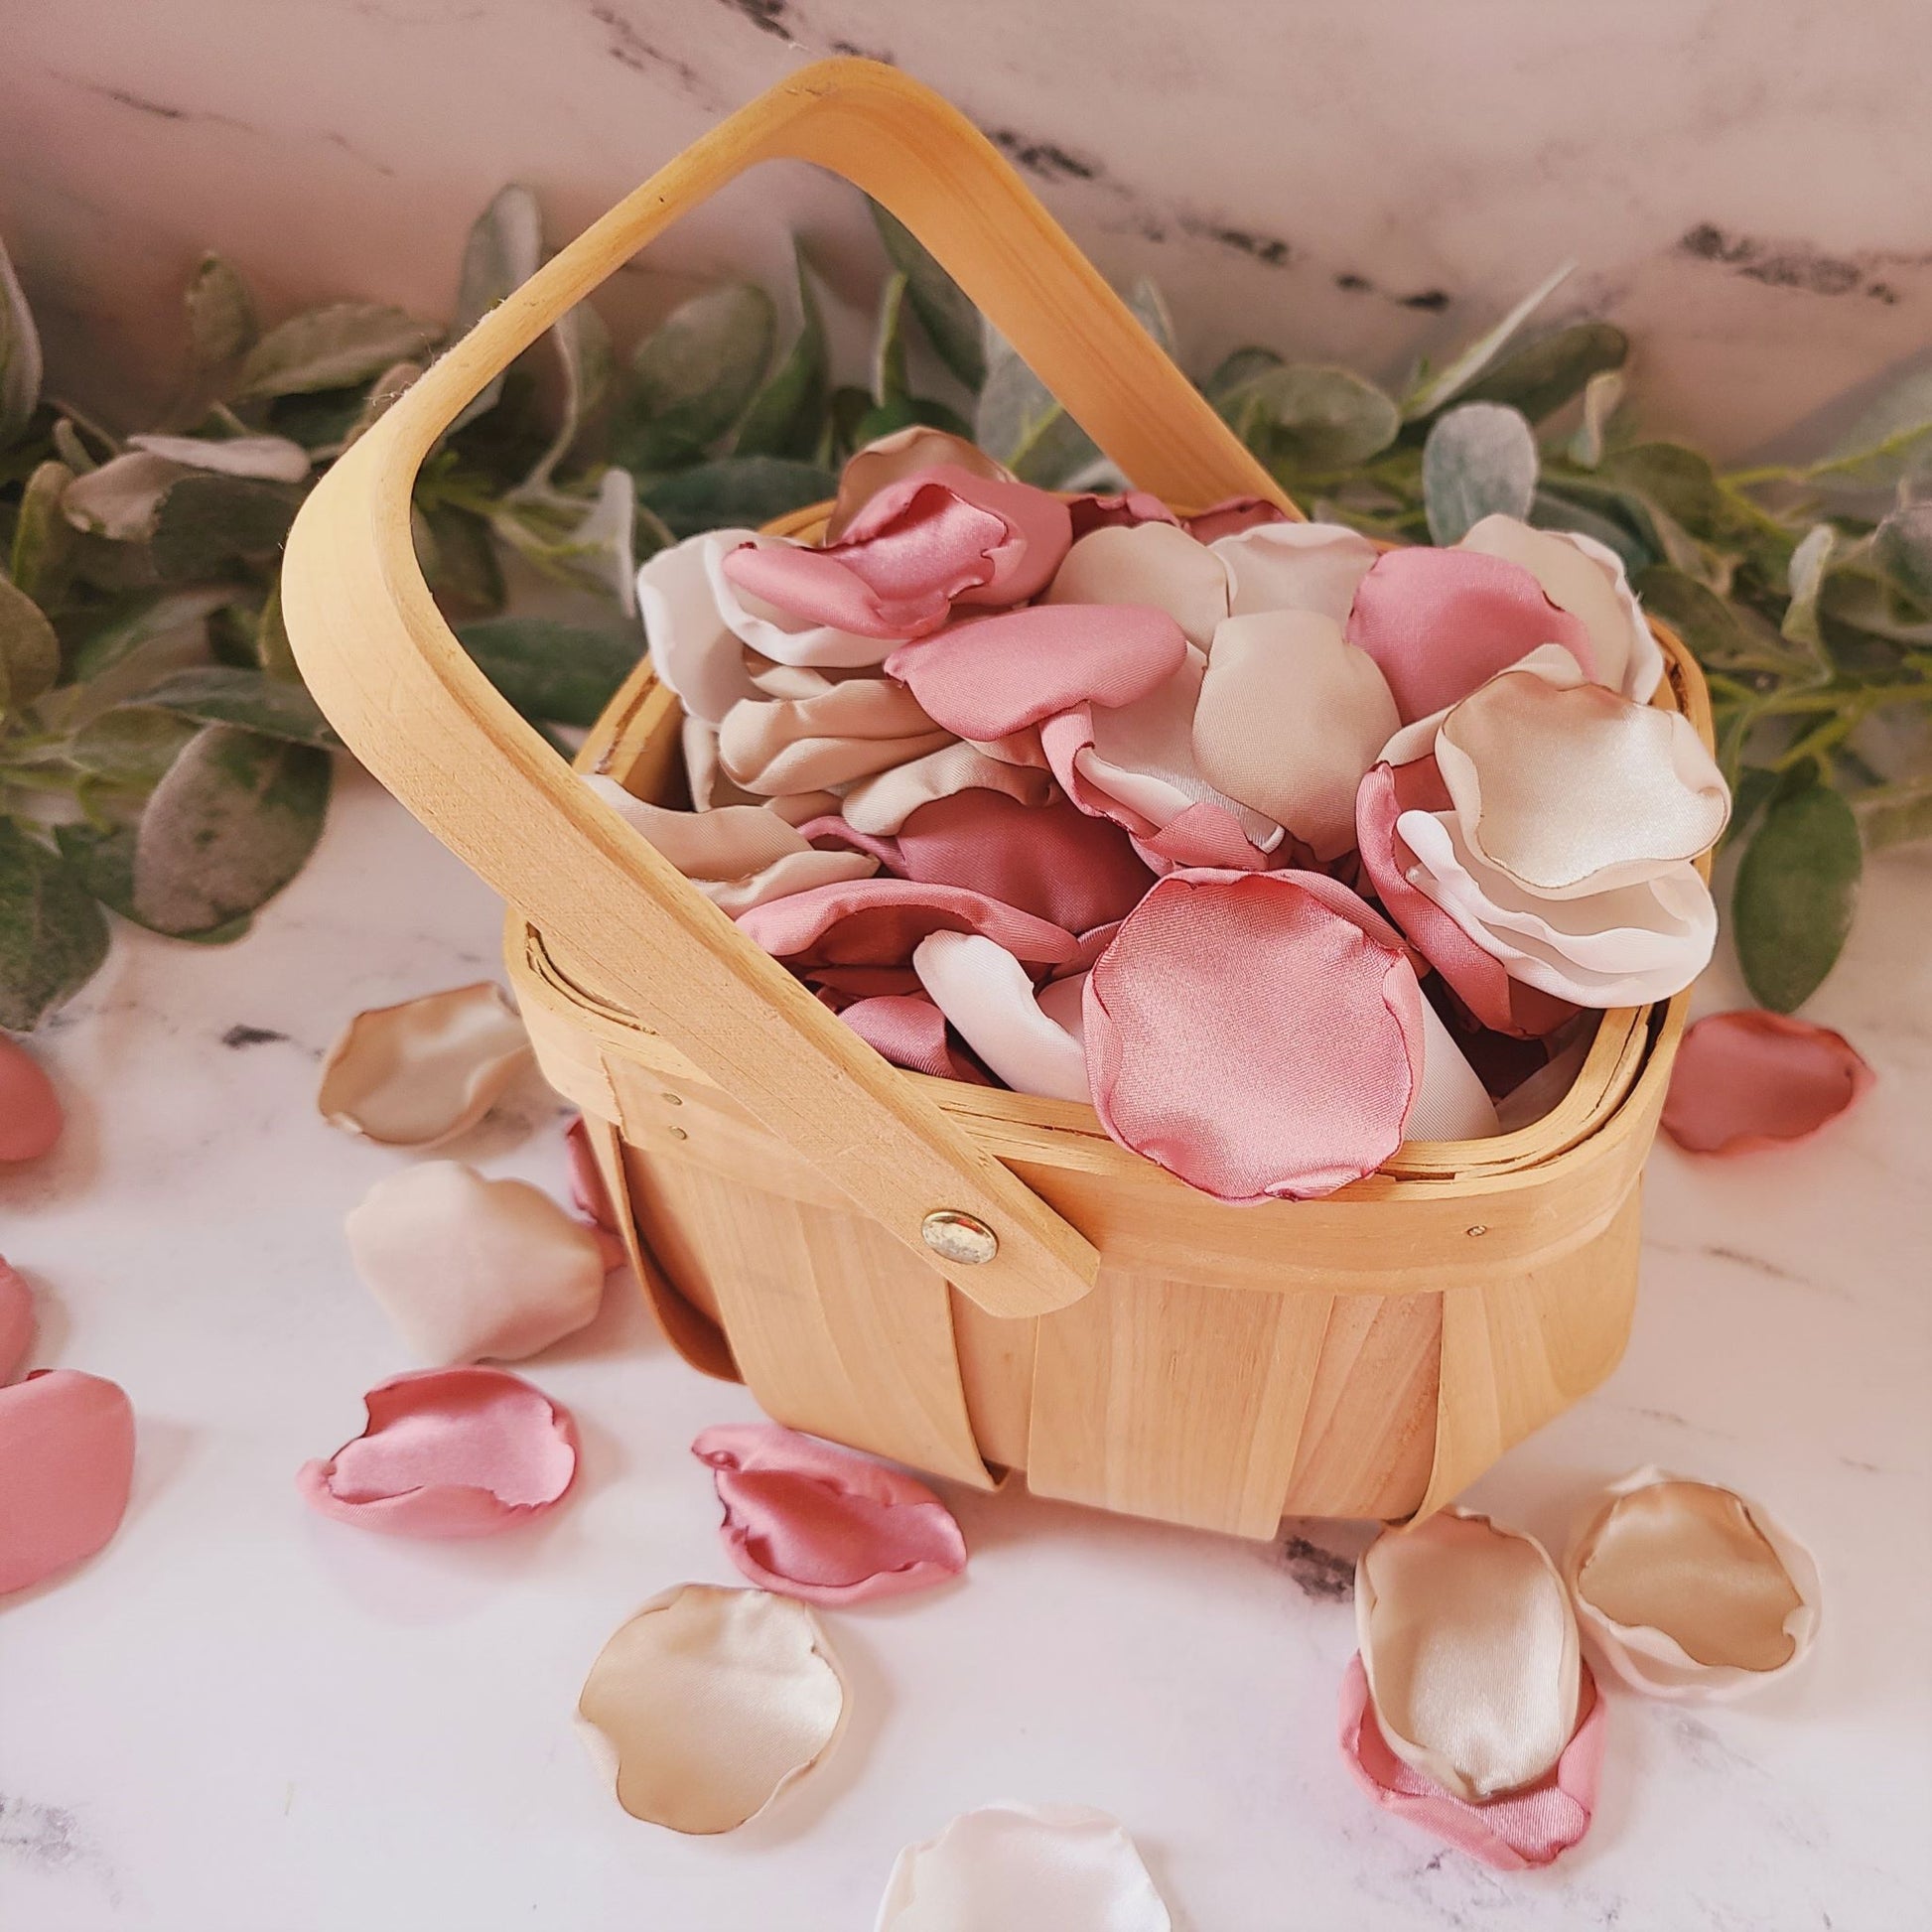 Petal Garden - Silk Rose Petals - Dusty Rose